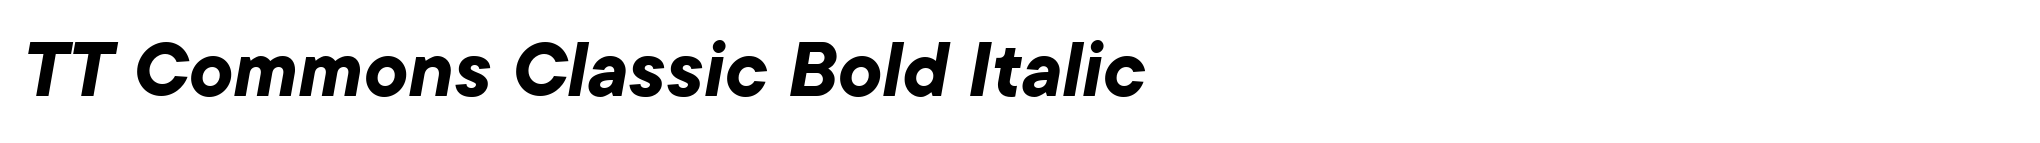 TT Commons Classic Bold Italic image